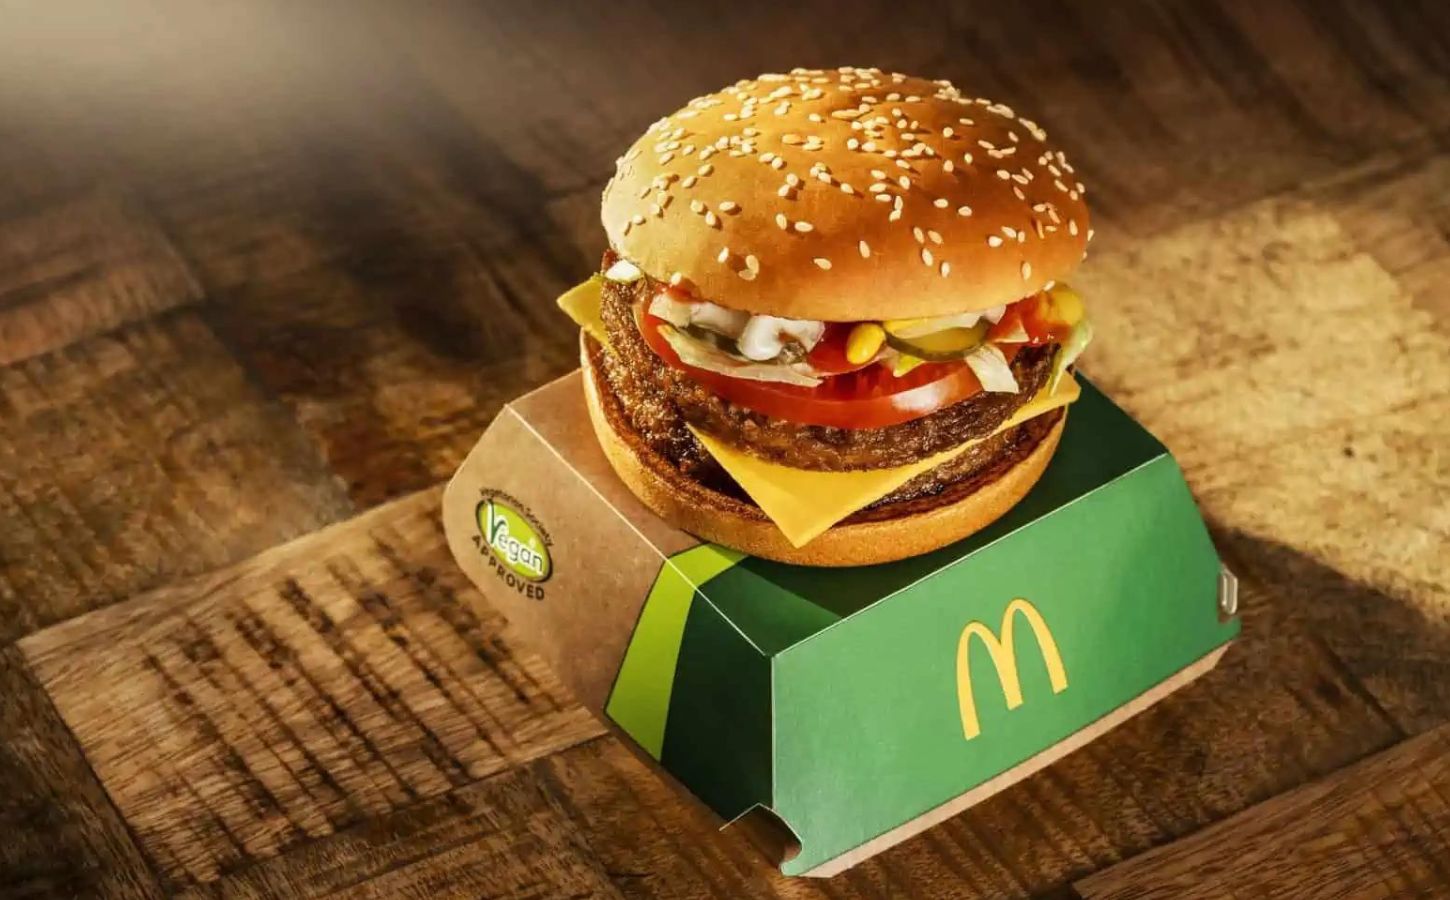 The new vegan Double McPlant burger from McDonald's